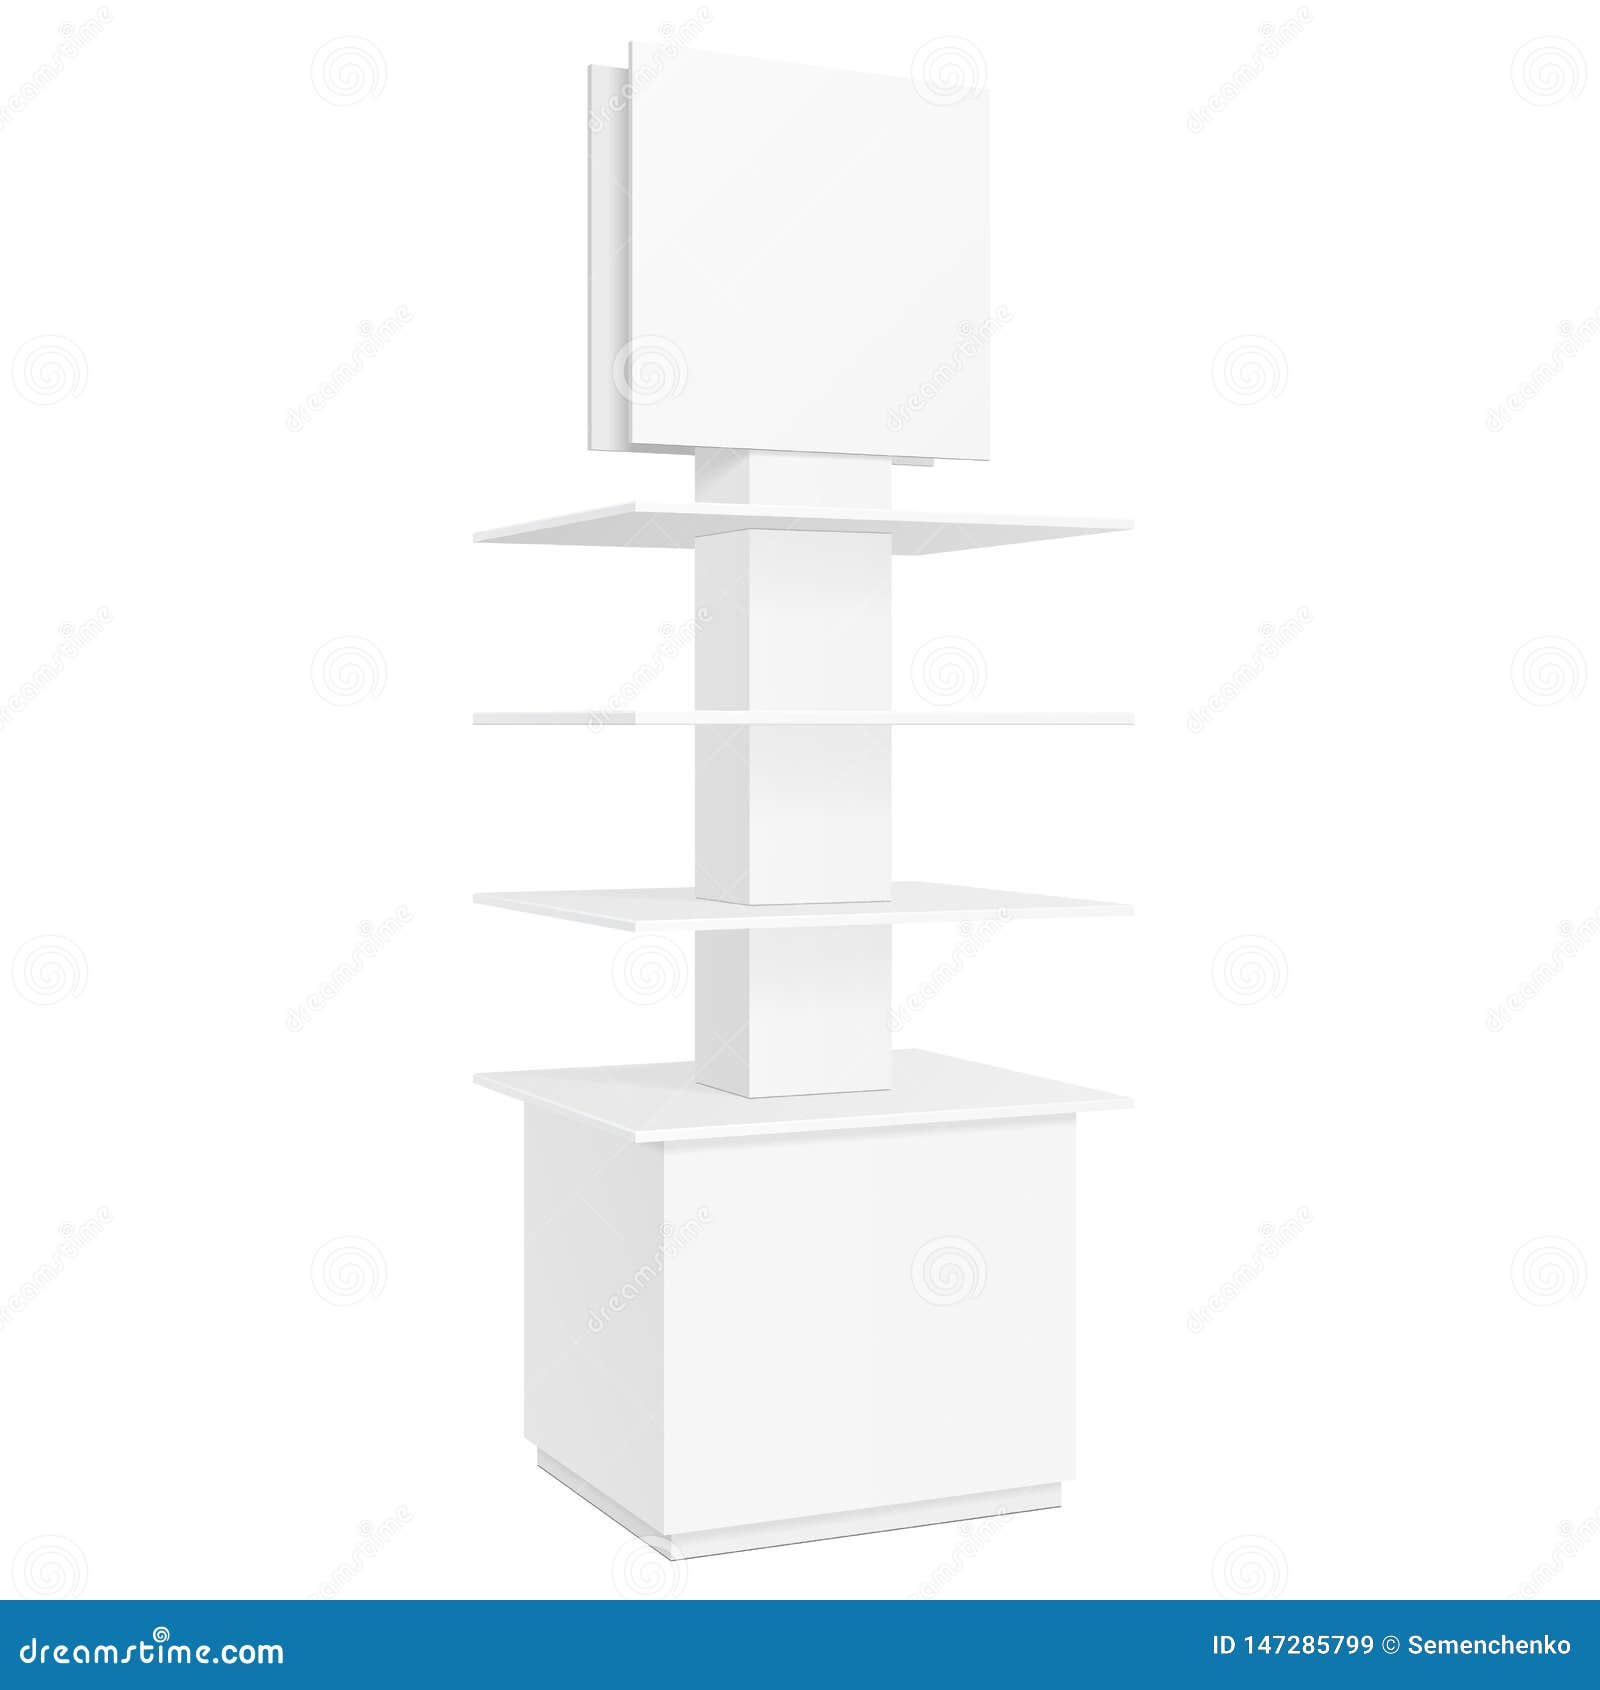 Download Mockup White Round POS POI Cardboard Floor Display Rack For Supermarket Blank Empty Displays ...